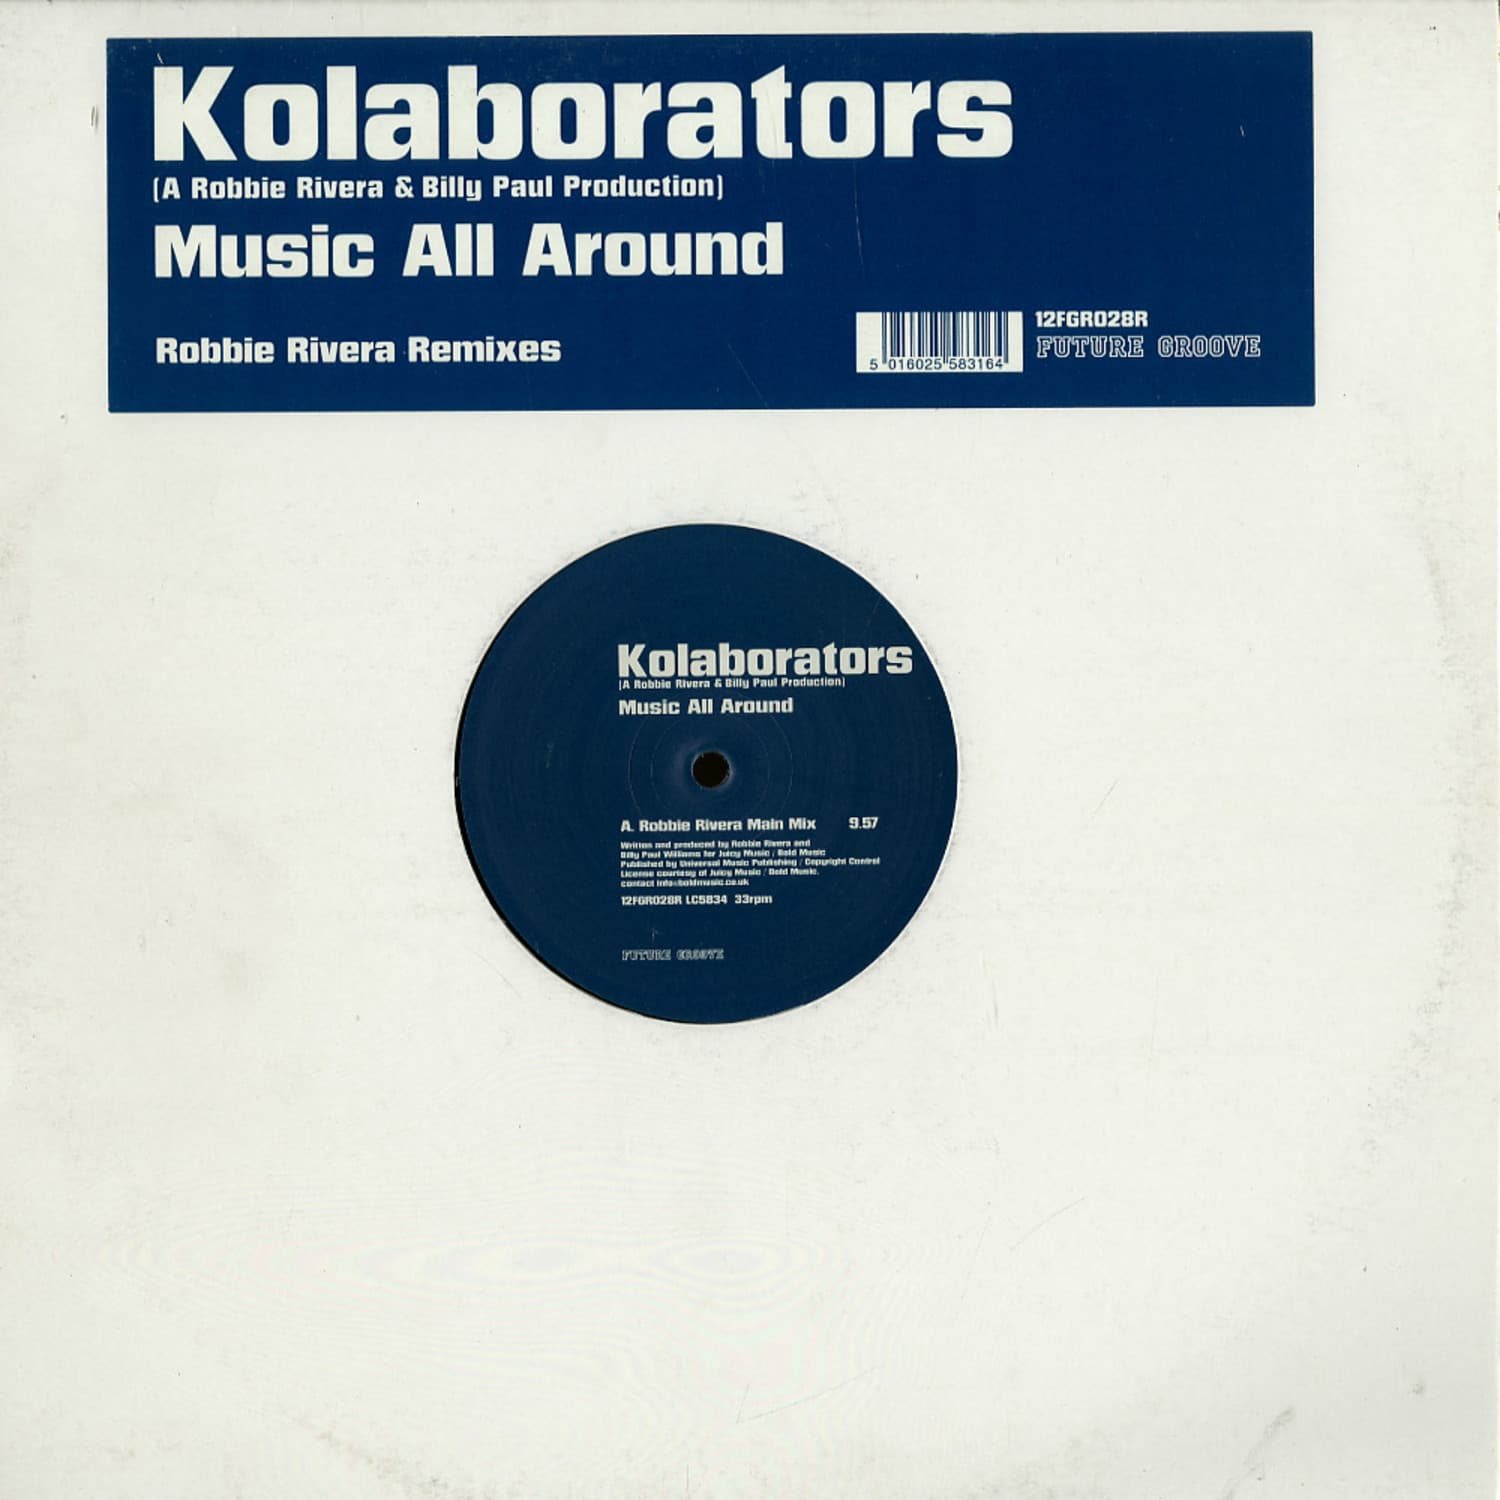 Kolaborators - MUSIC ALL AROUND 